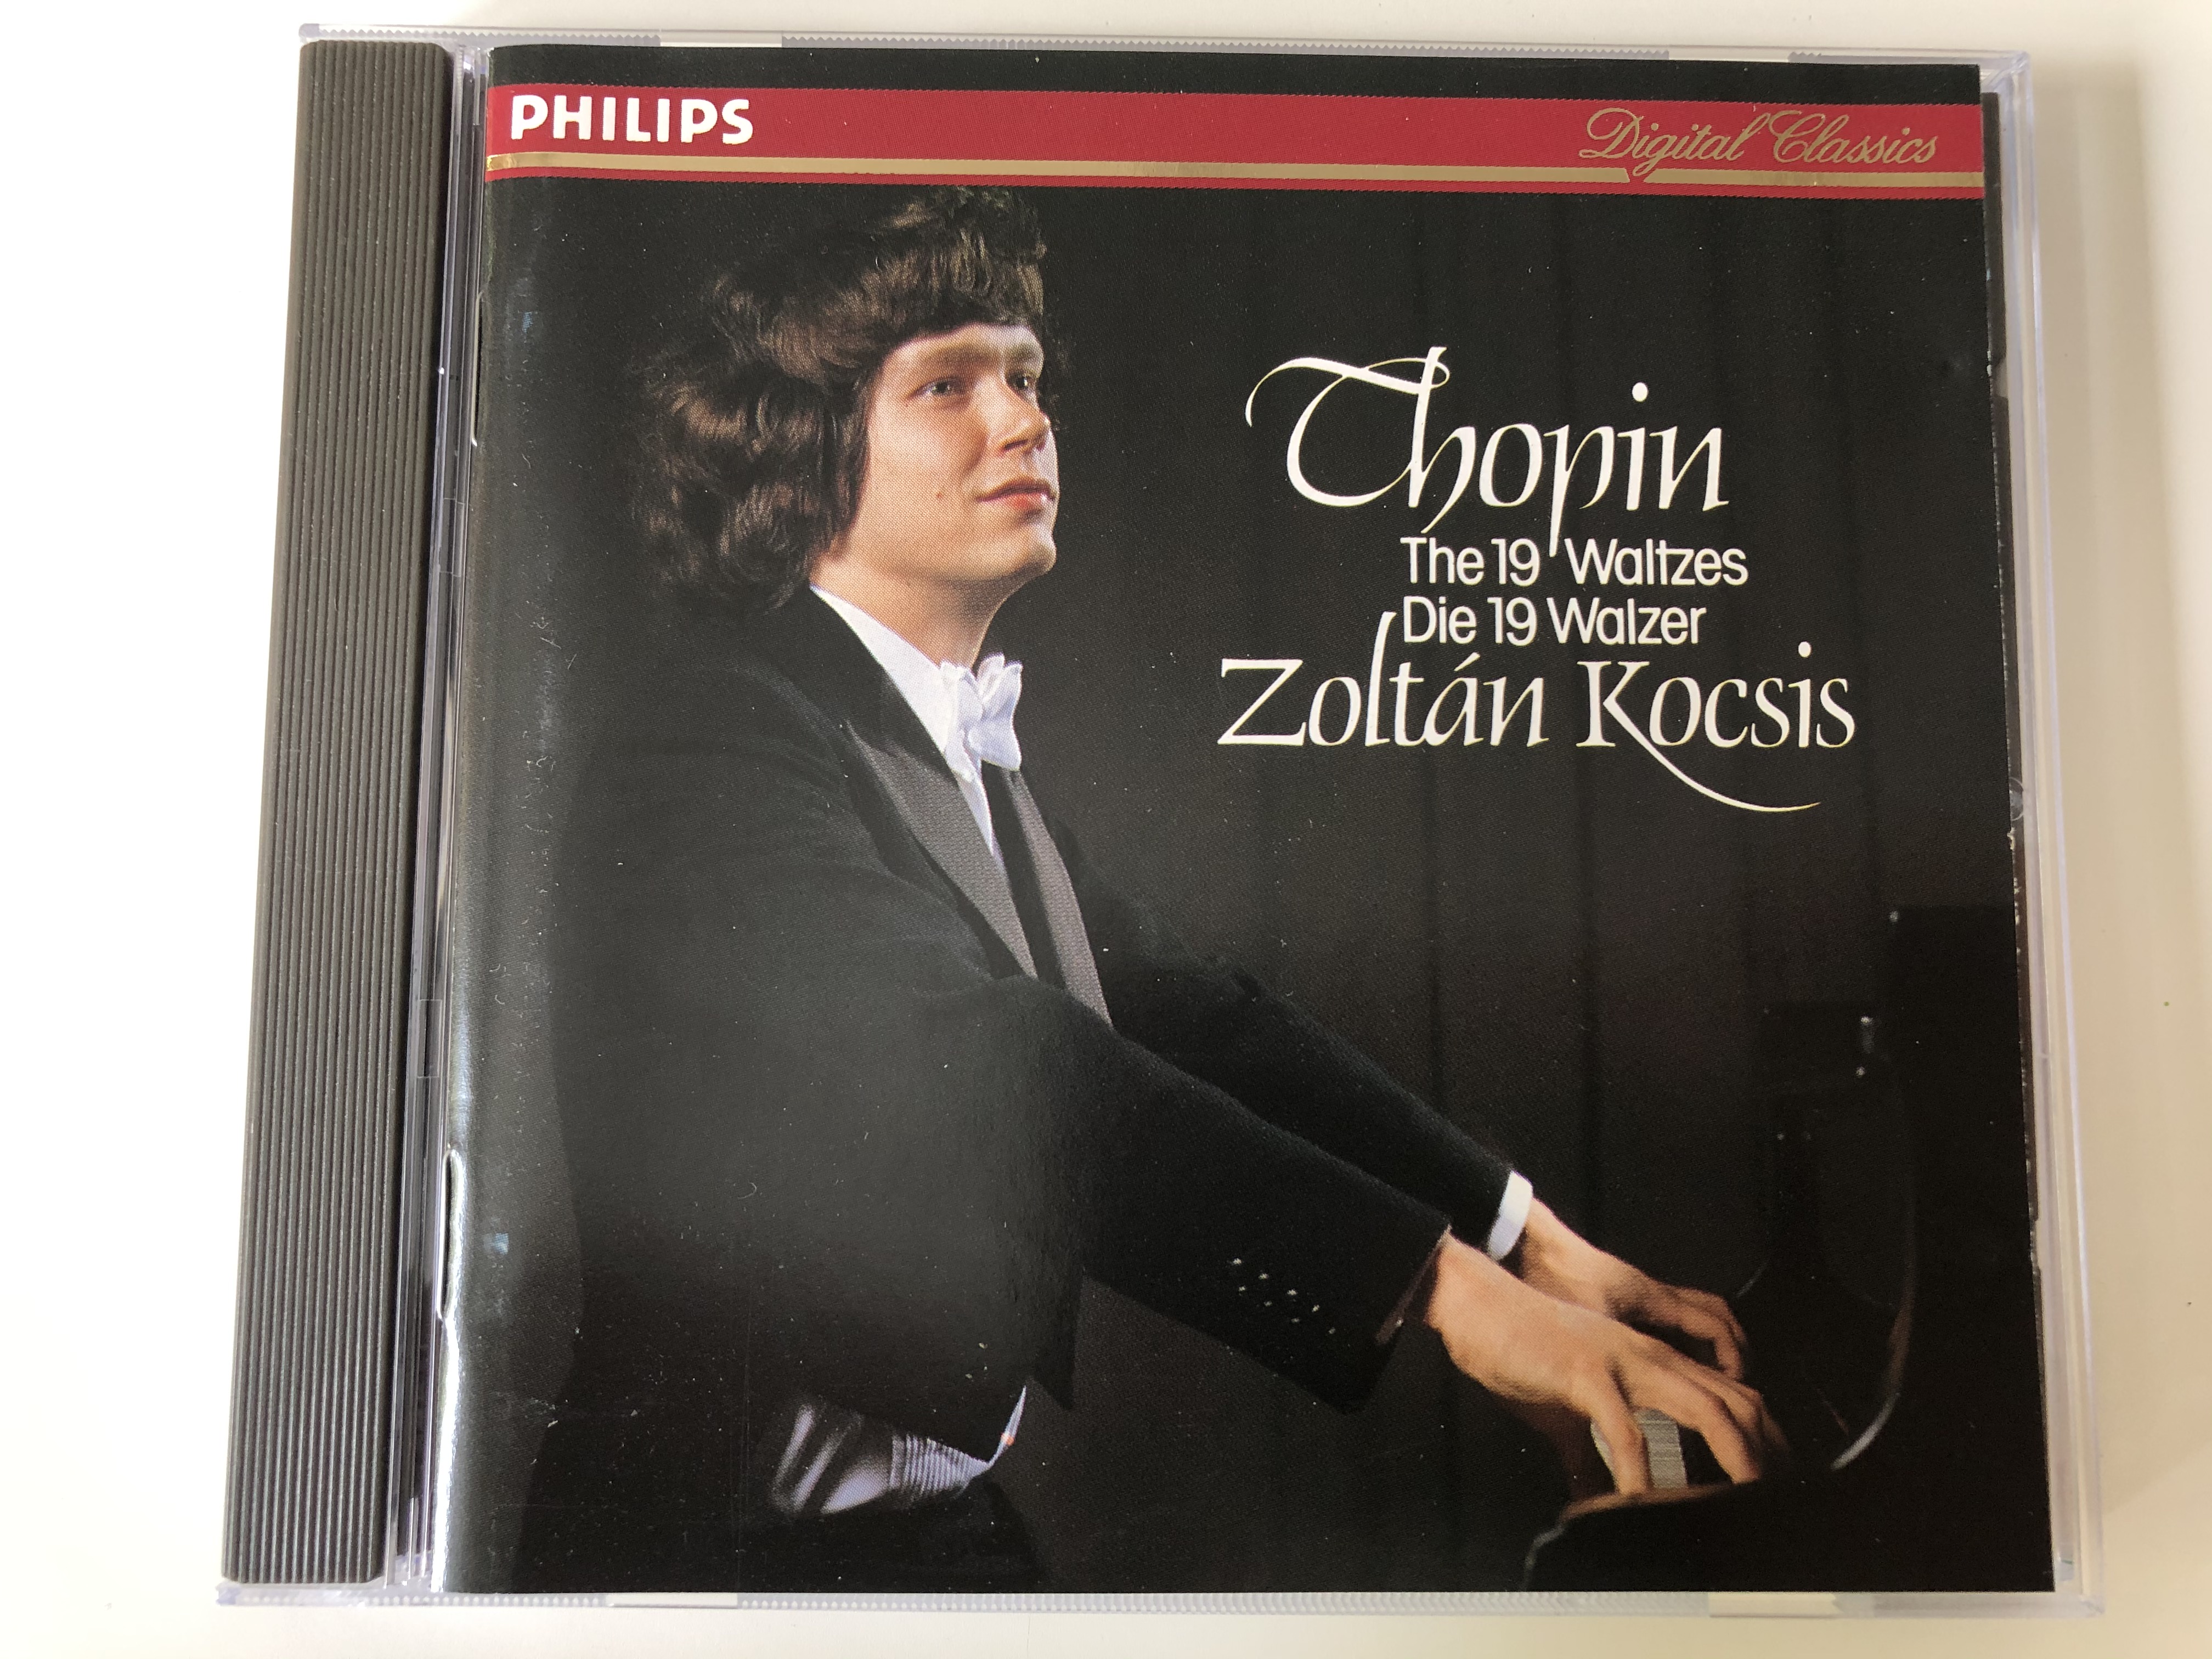 chopin-the-19-waltzes-die-19-walzer-zolt-n-kocsis-philips-digital-classics-audio-cd-1983-412-890-2-1-.jpg